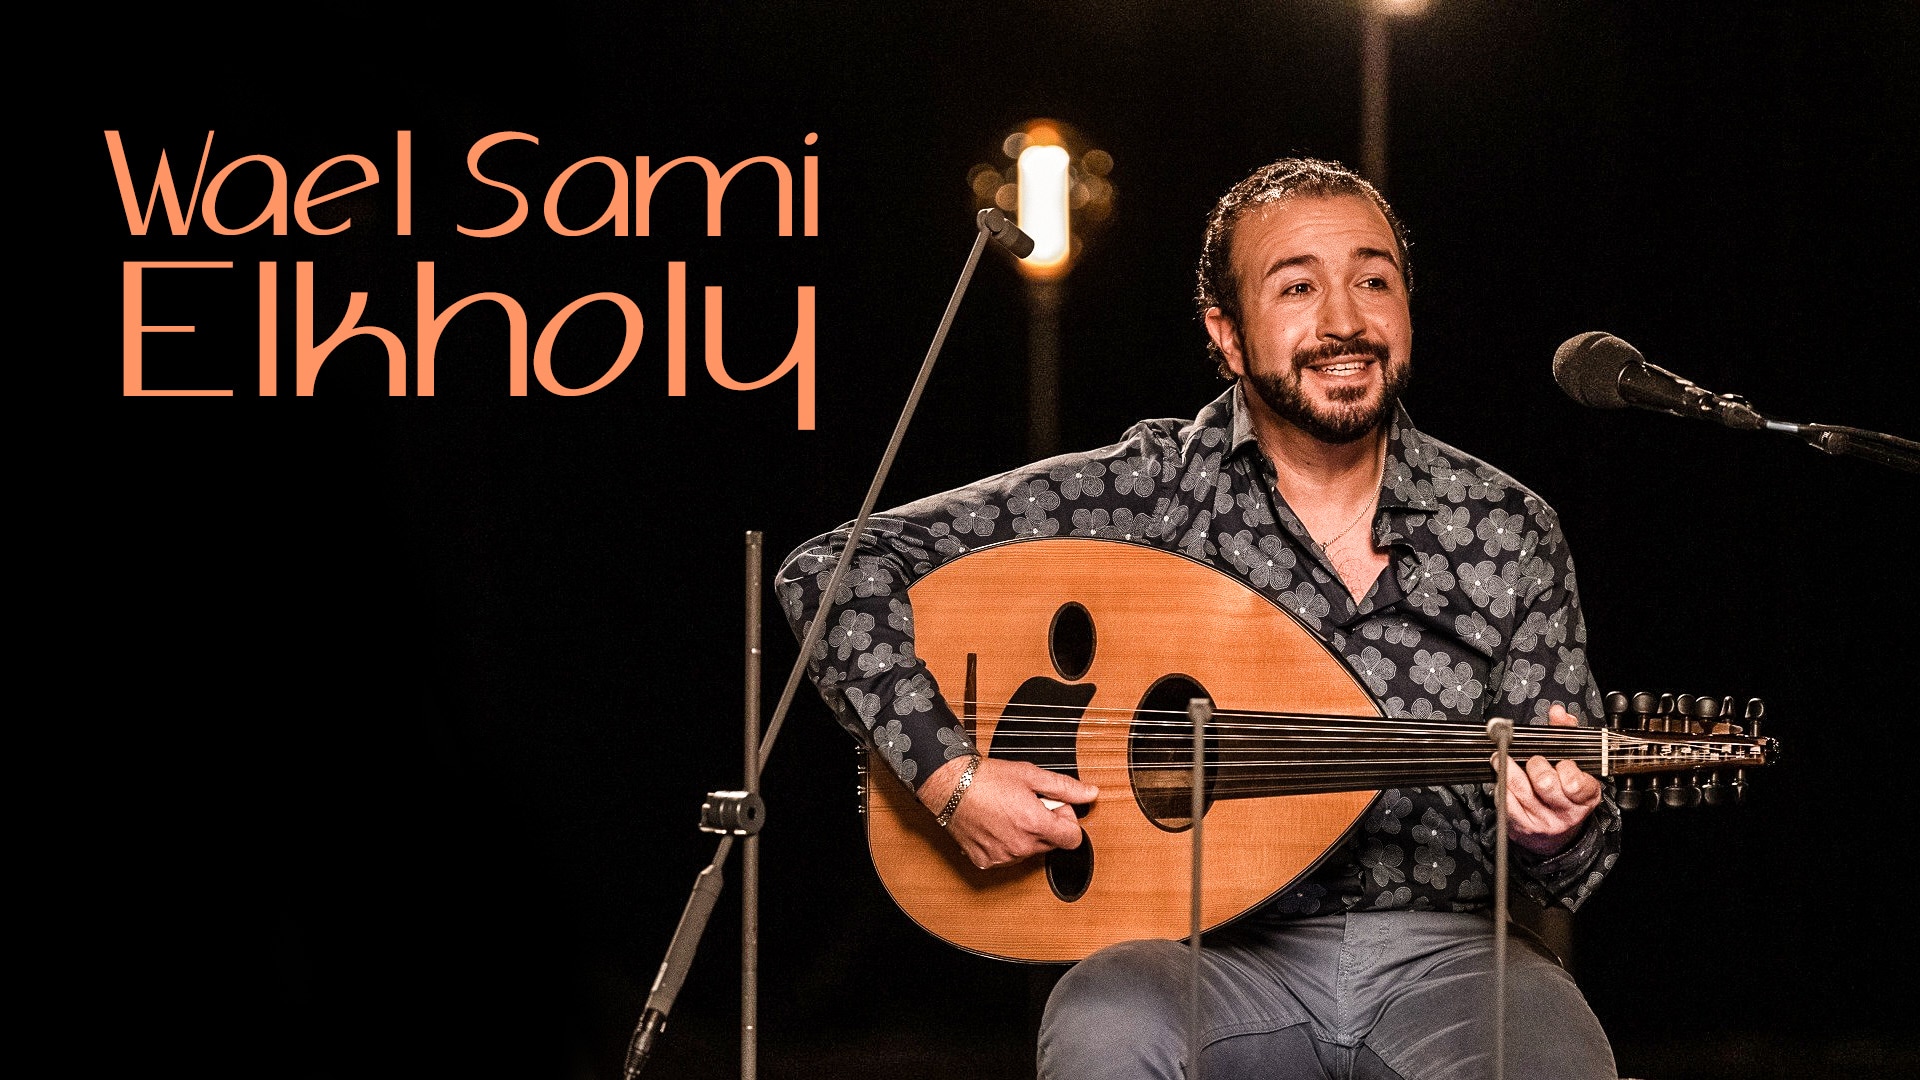 Wael Sami Elkholy